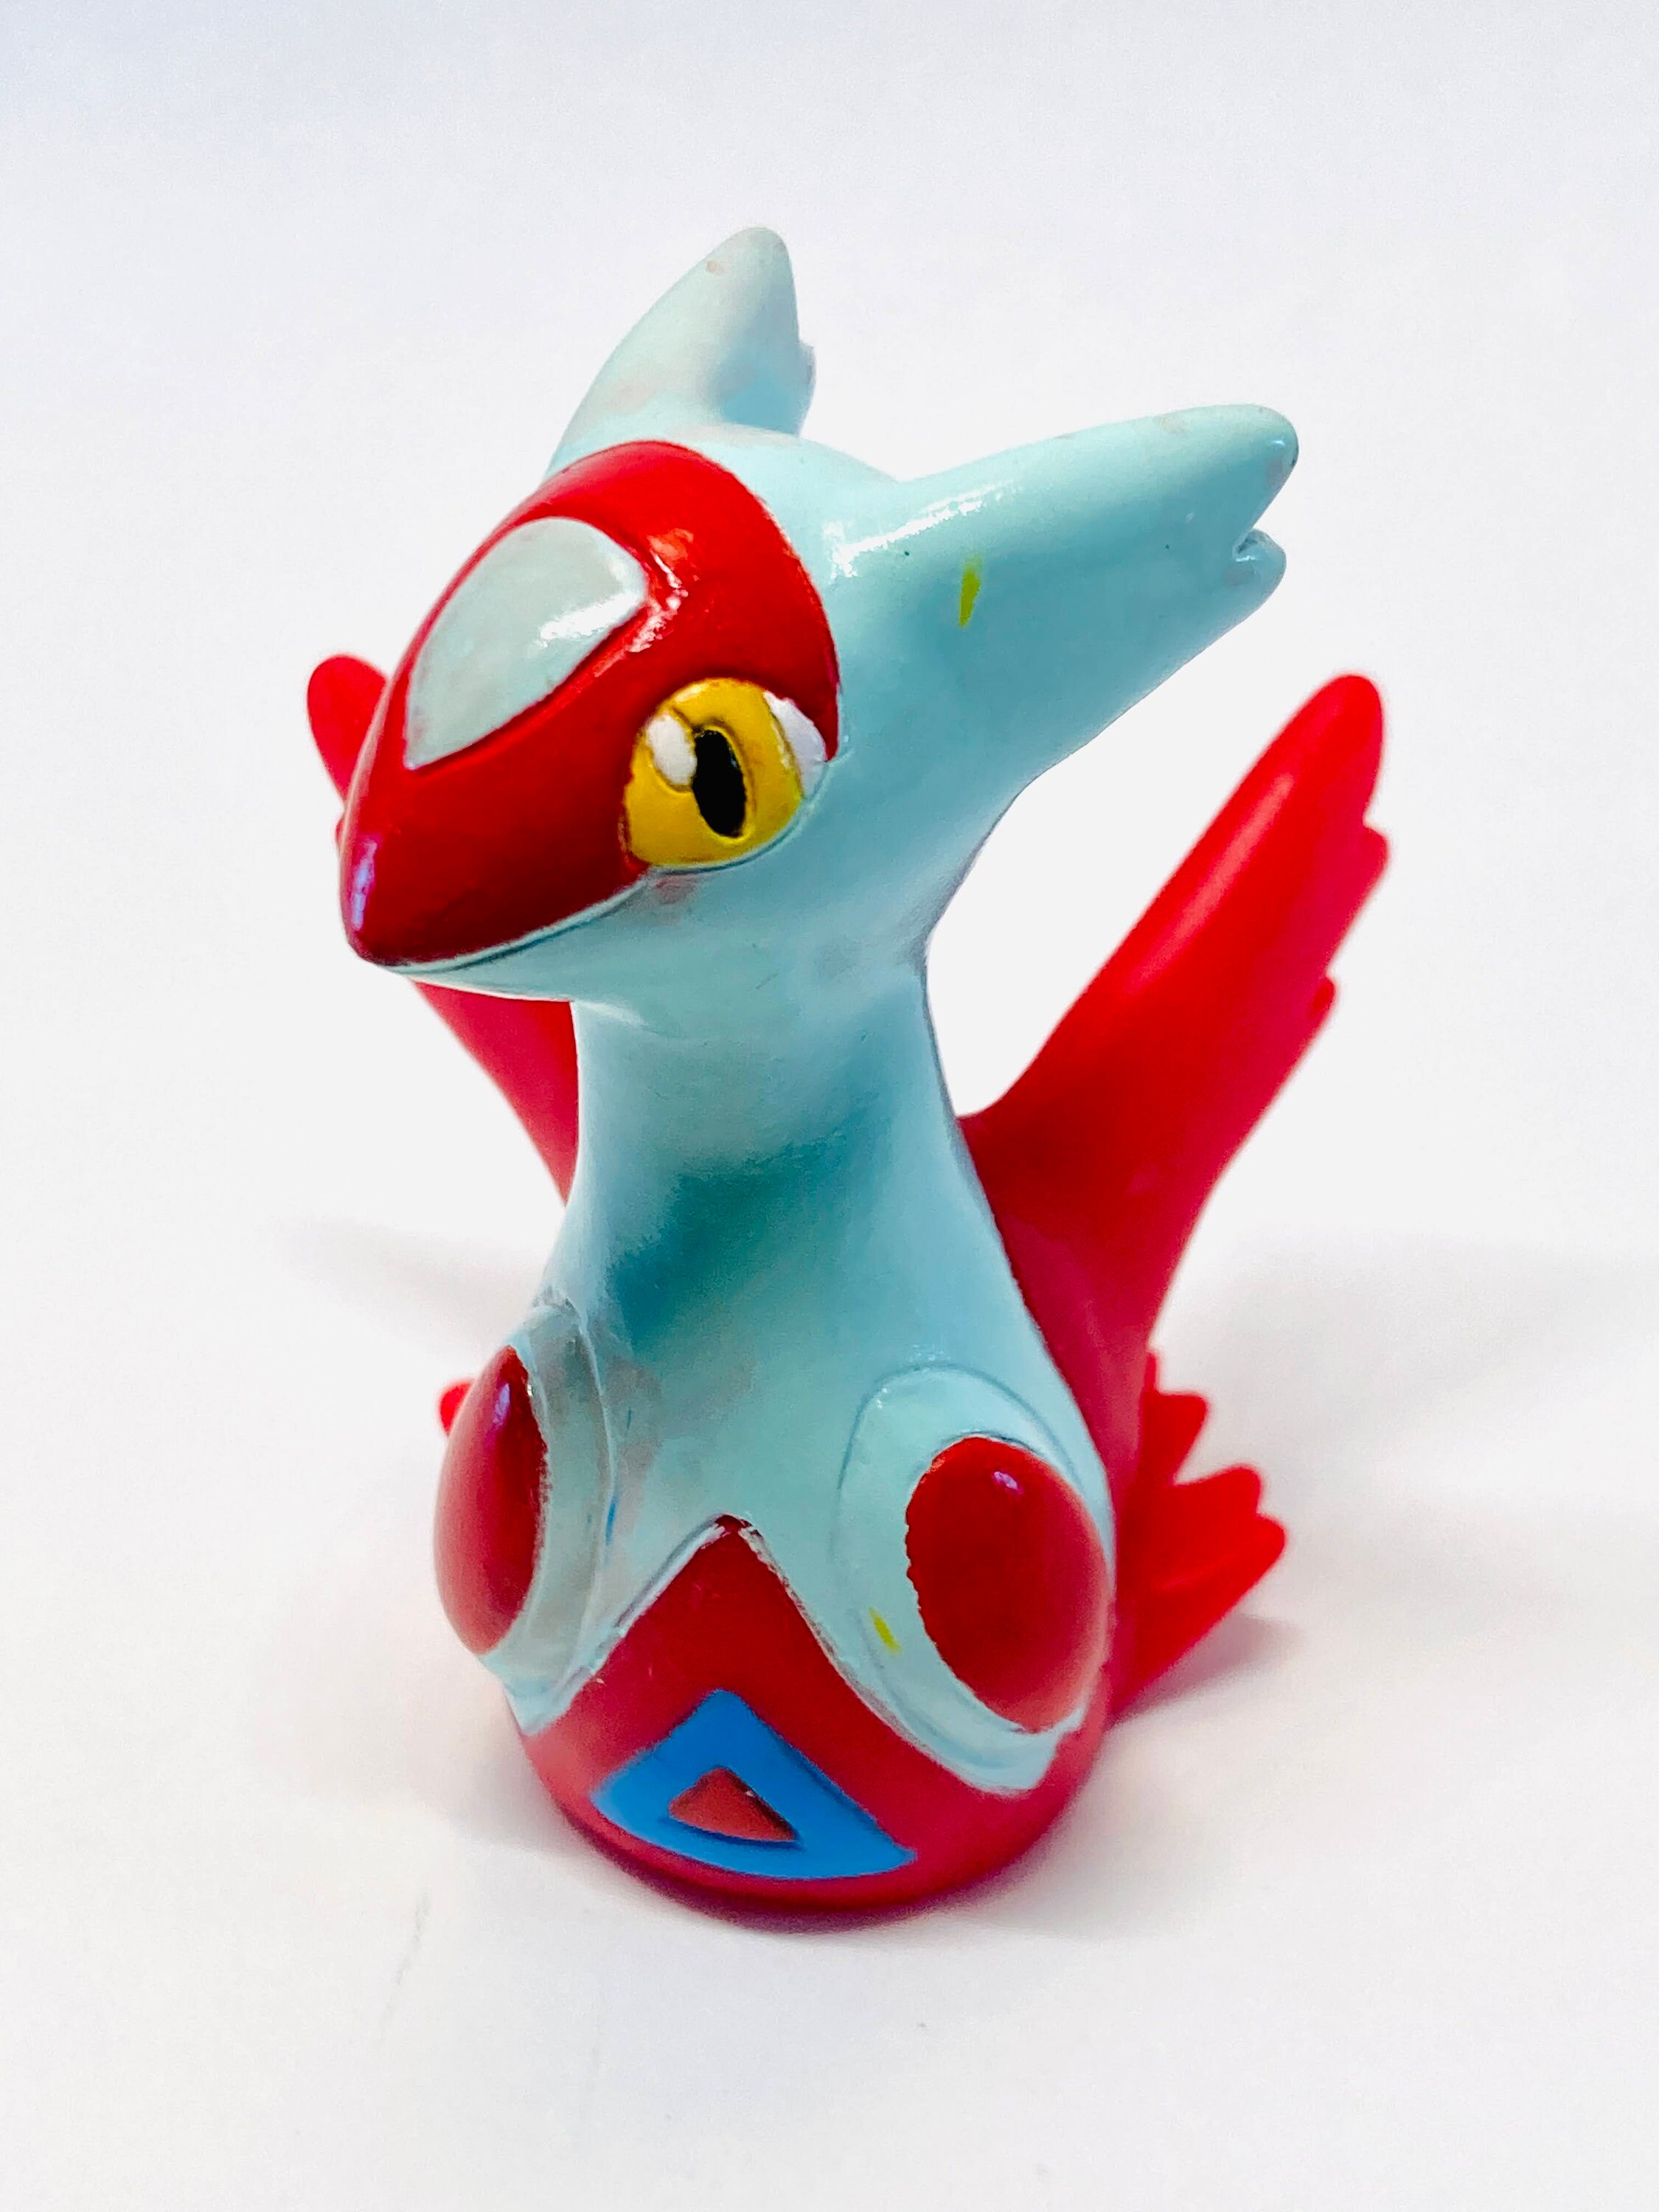 Review Shiny Mega Rayquaza Plush Toy Hoopa Japan Pokemon Center Goods 